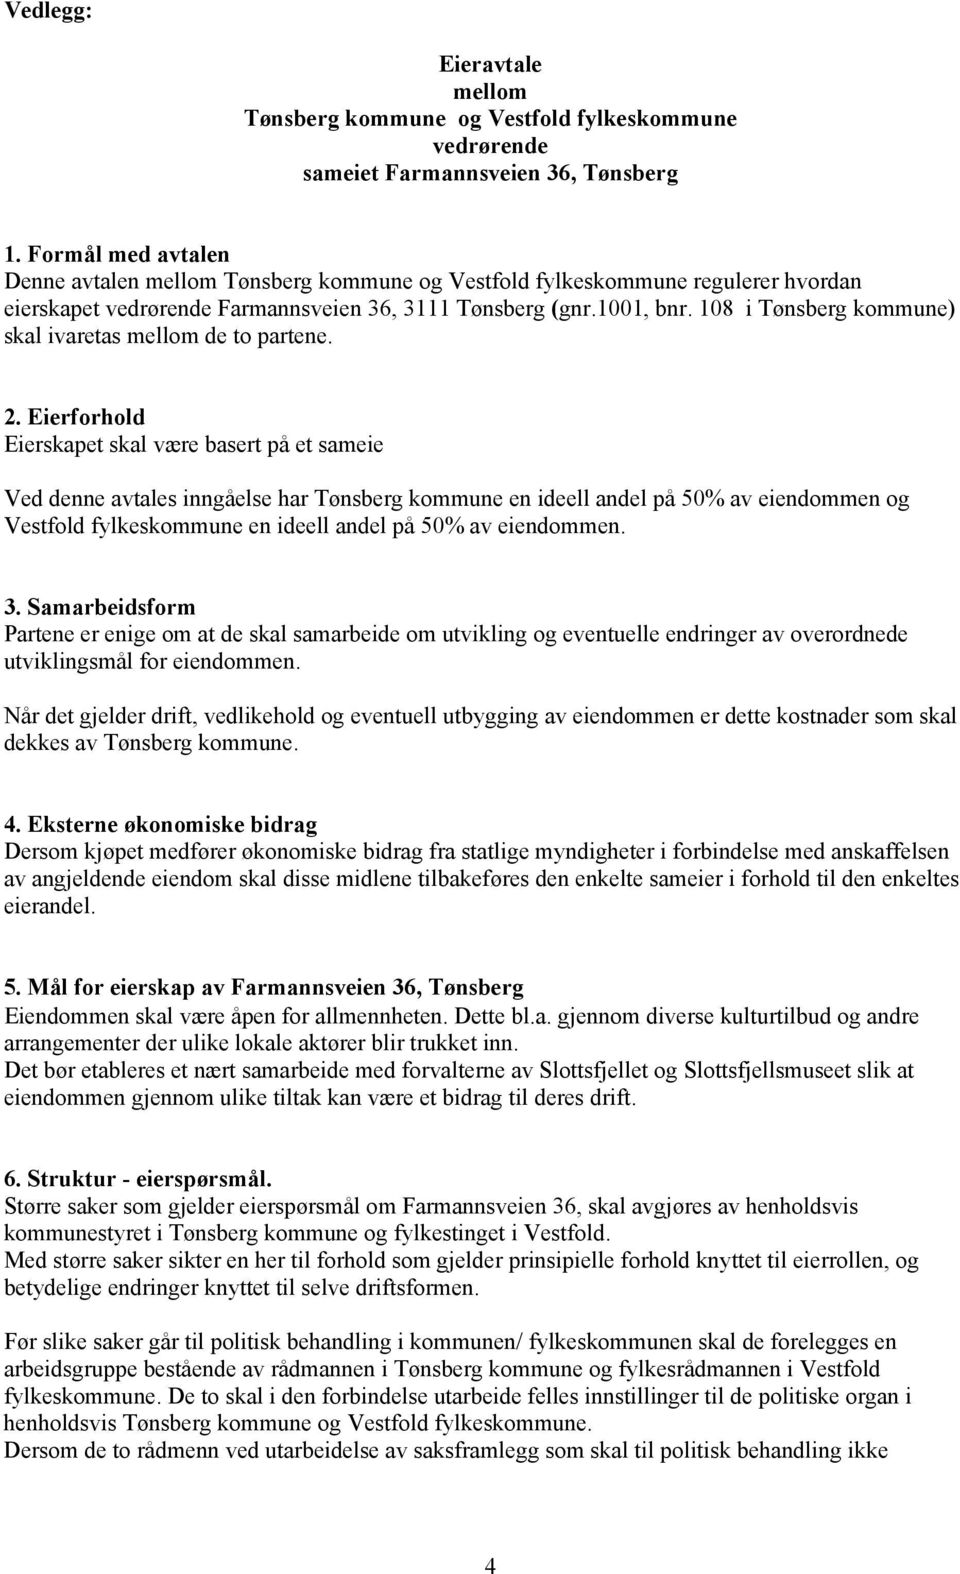 108 i Tønsberg kommune) skal ivaretas mellom de to partene. 2.